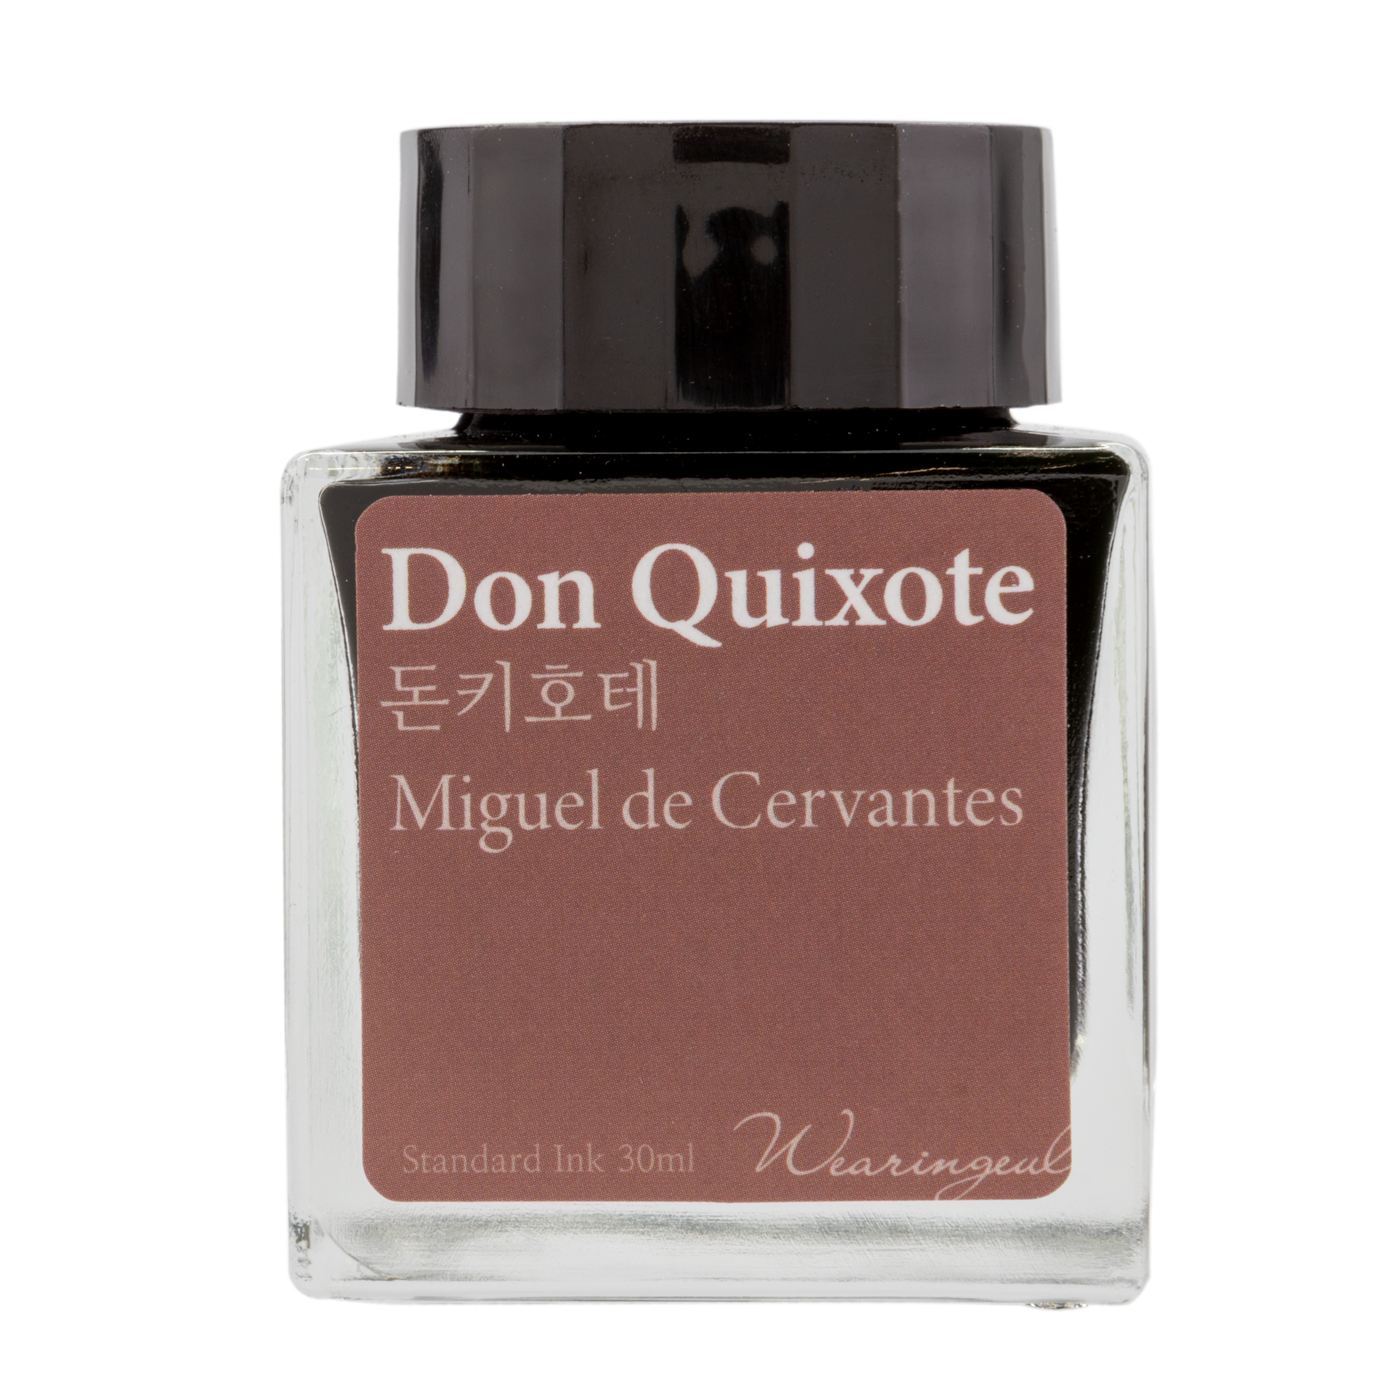 Wearingeul -Miguel de Cervantes - Don Quixote